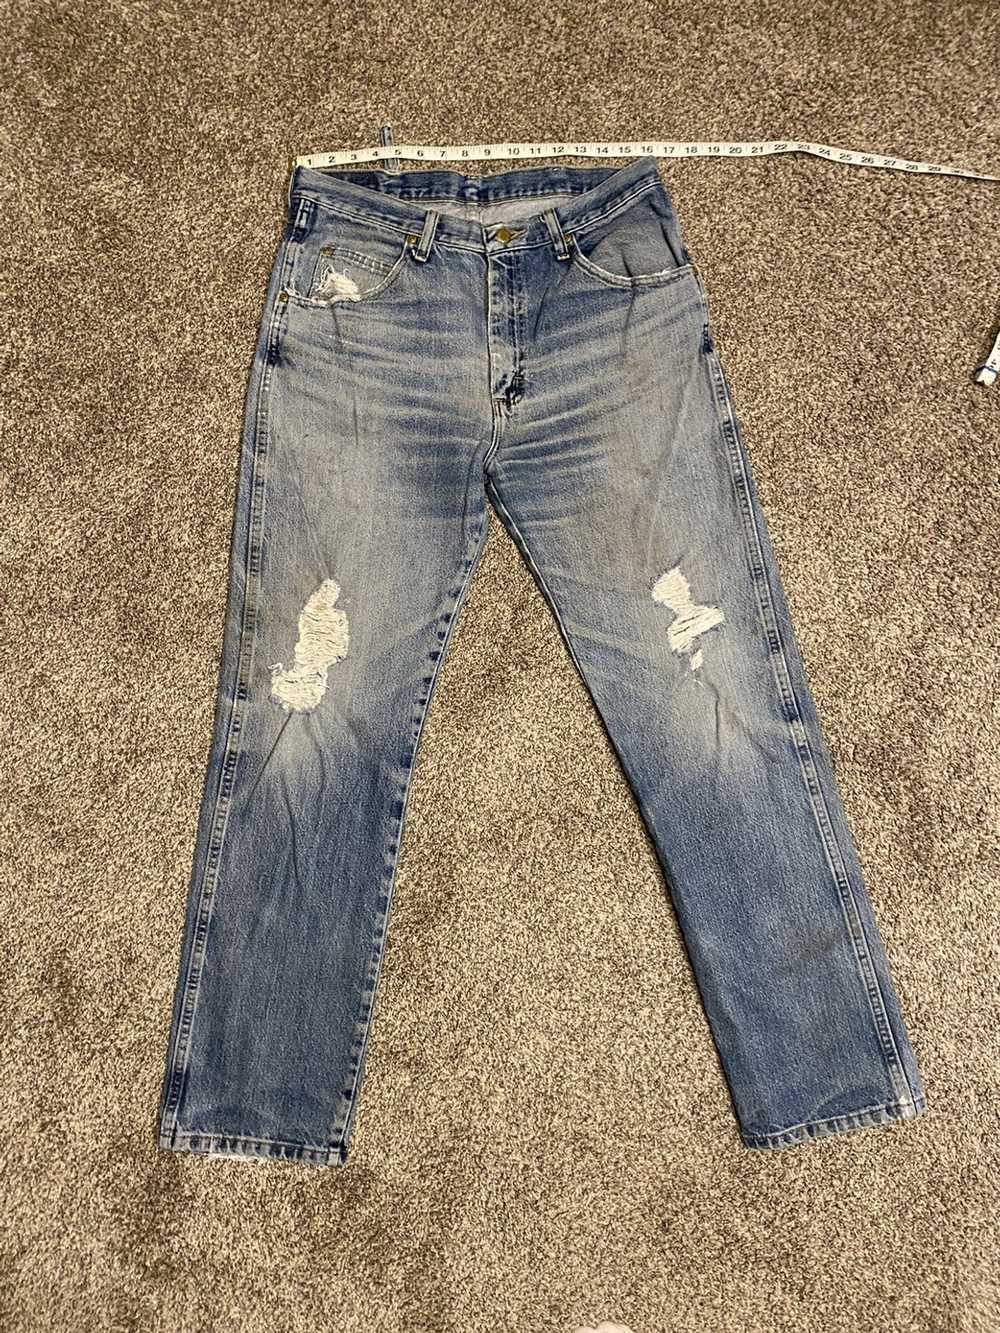 Wrangler Distressed wrangler jeans 34x32 - image 3